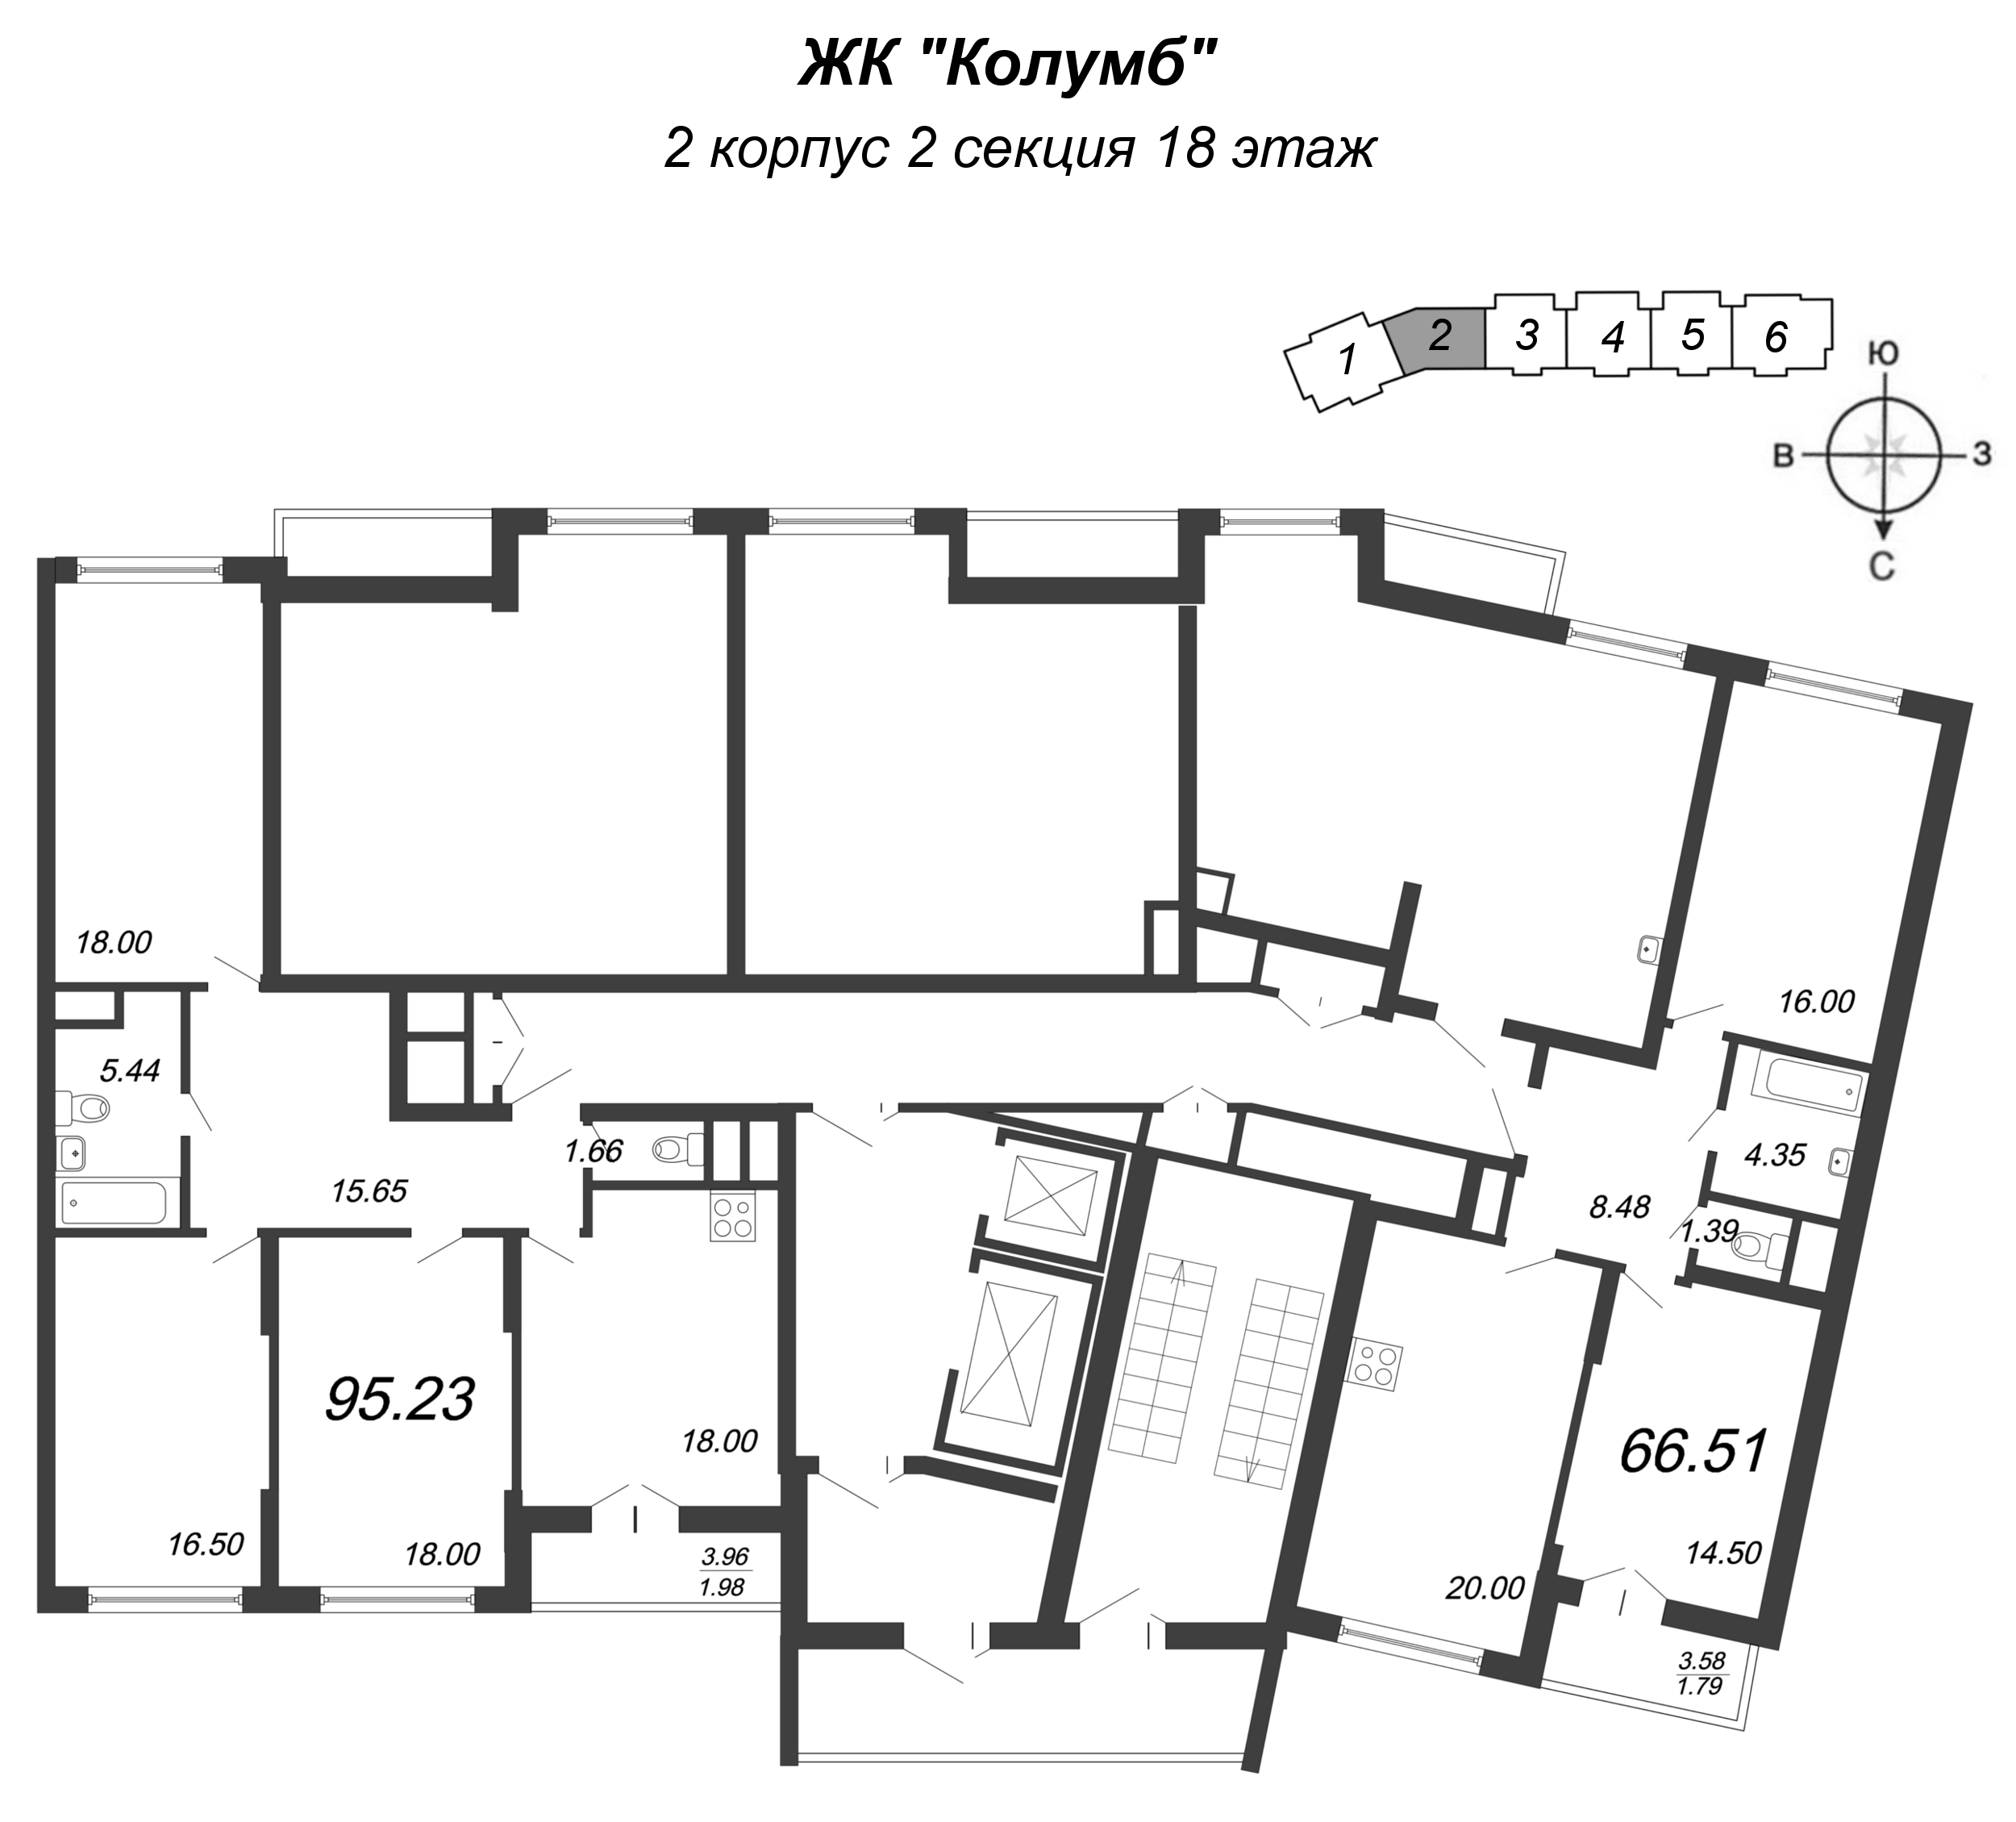 4-комнатная (Евро) квартира, 96.4 м² - планировка этажа